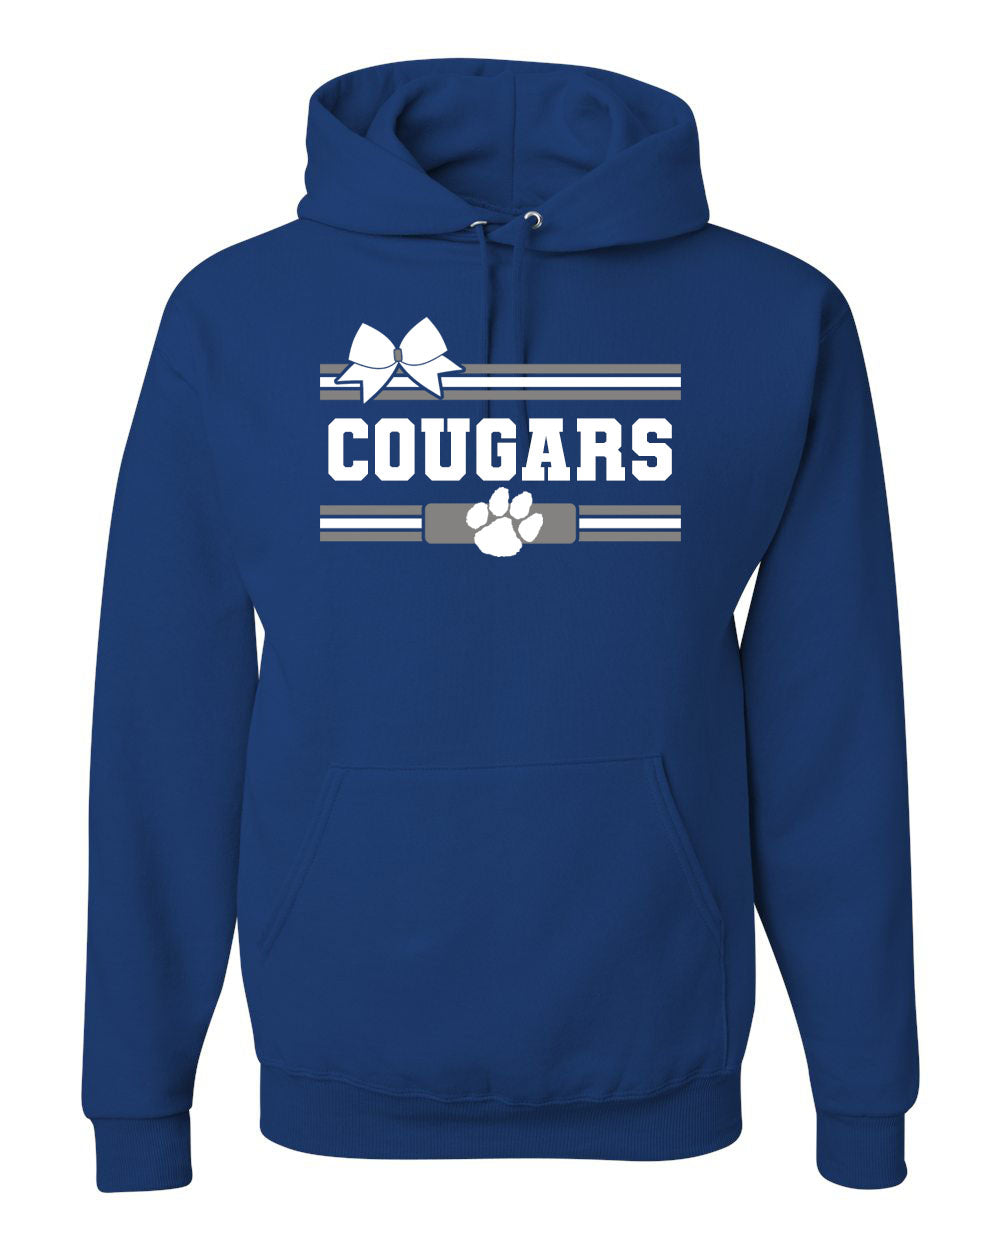 Cougar Bow Hooded Sweatshirt, Stillwater